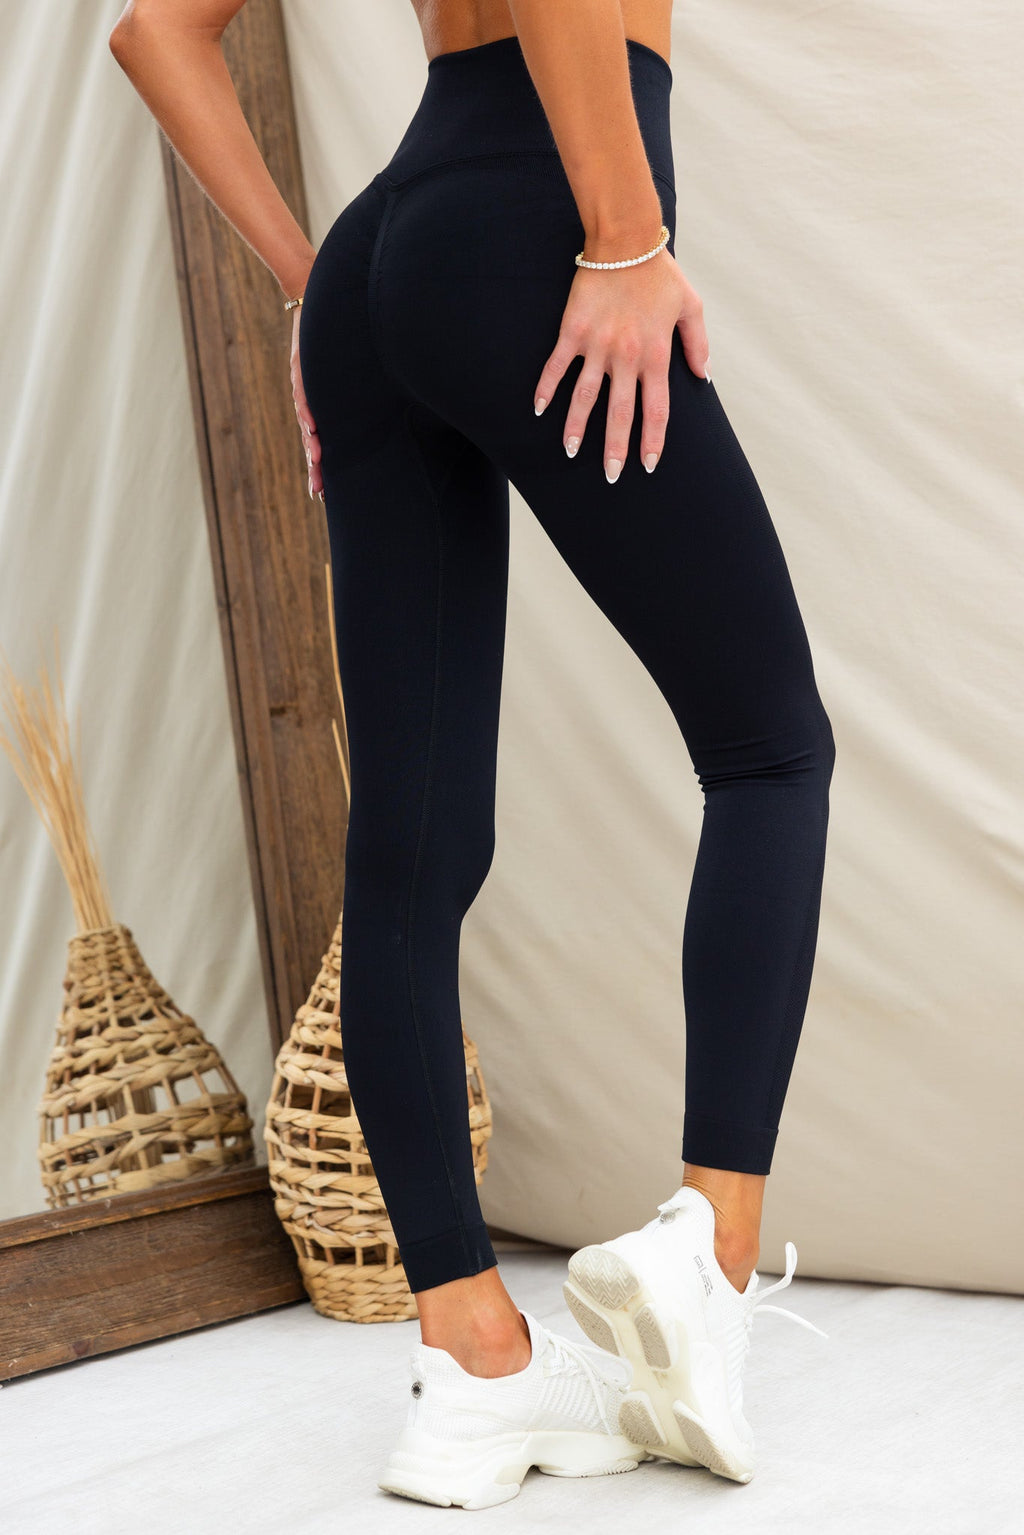 Women's Leggings & Workout Tights. Running Bare Activewear - Flex